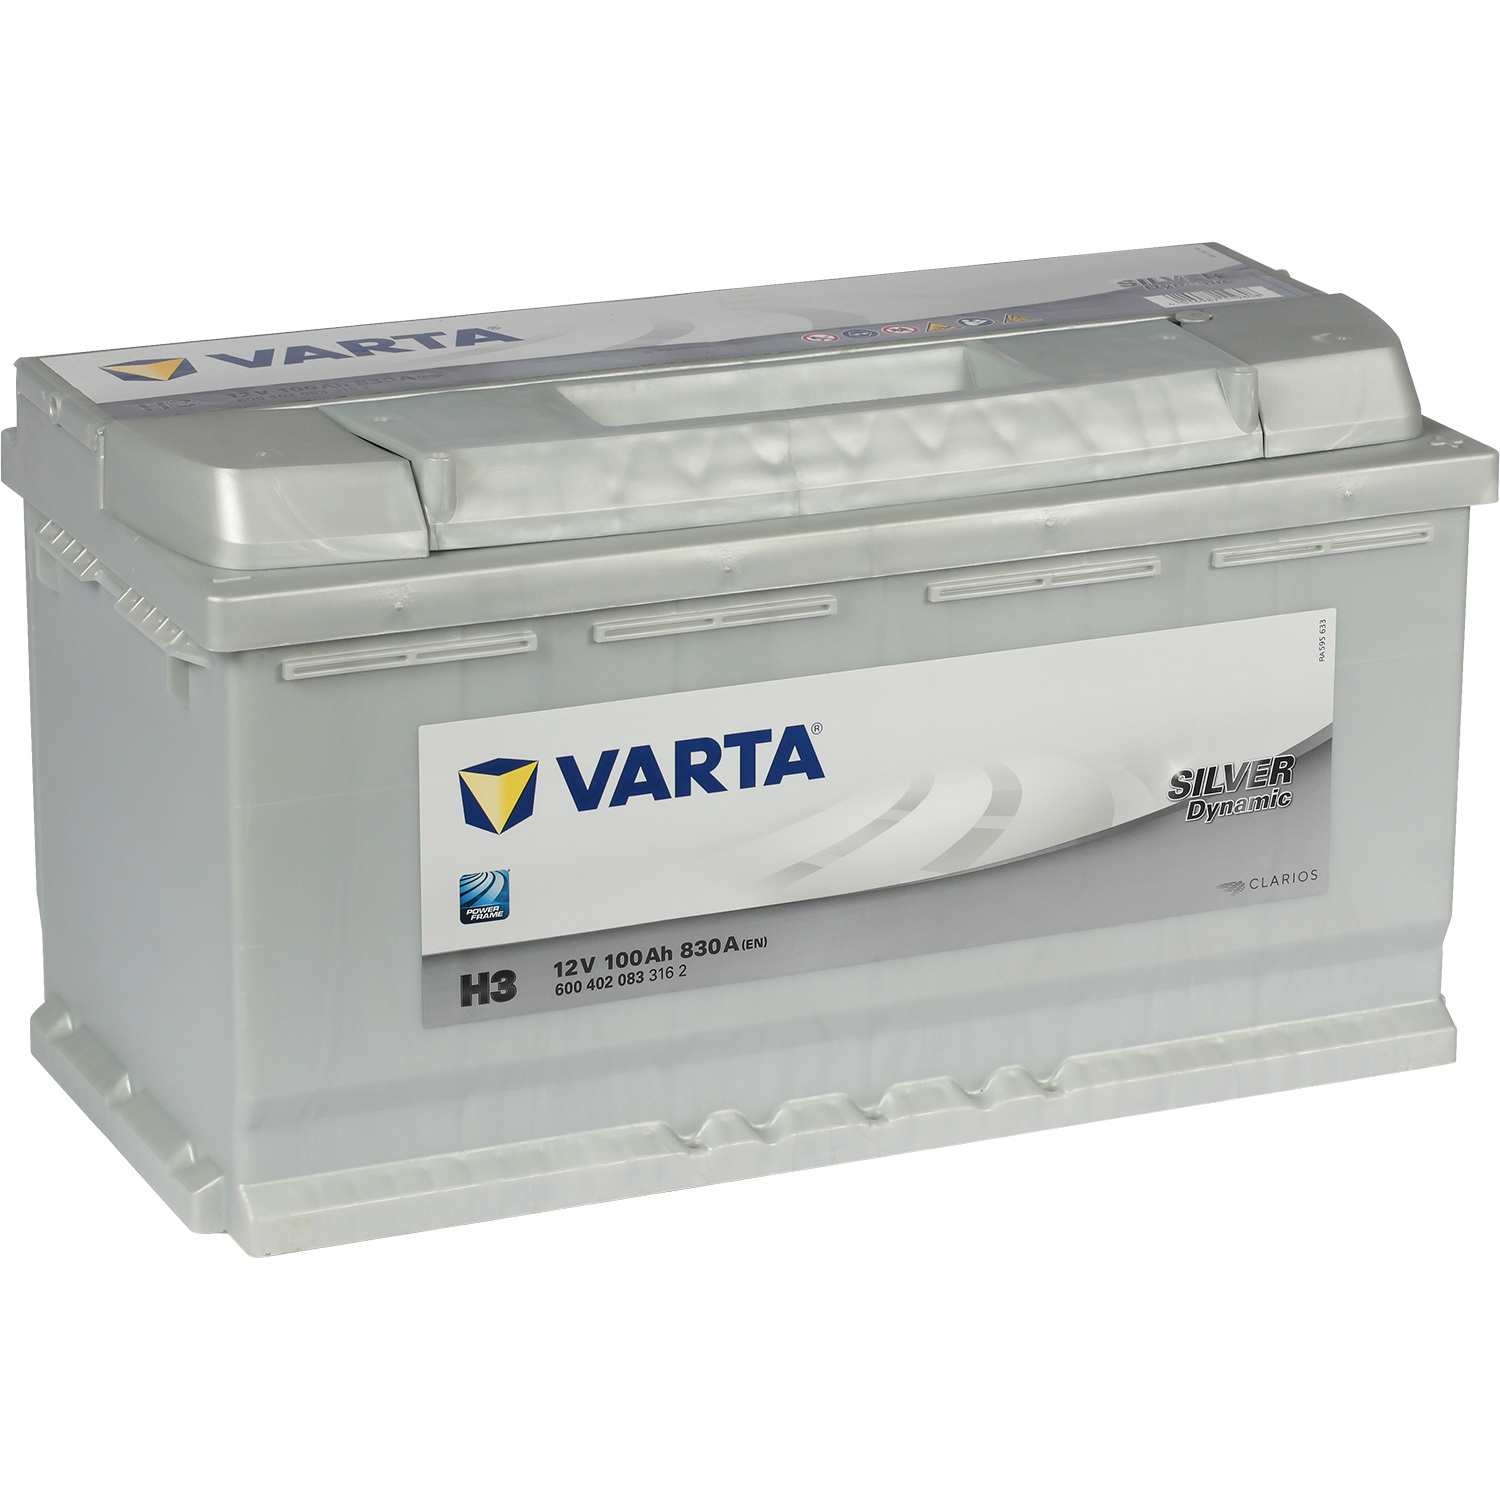 Varta Автомобильный аккумулятор Varta Silver Dynamic H3 100 Ач обратная полярность L5 varta автомобильный аккумулятор varta 72 ач обратная полярность lb3